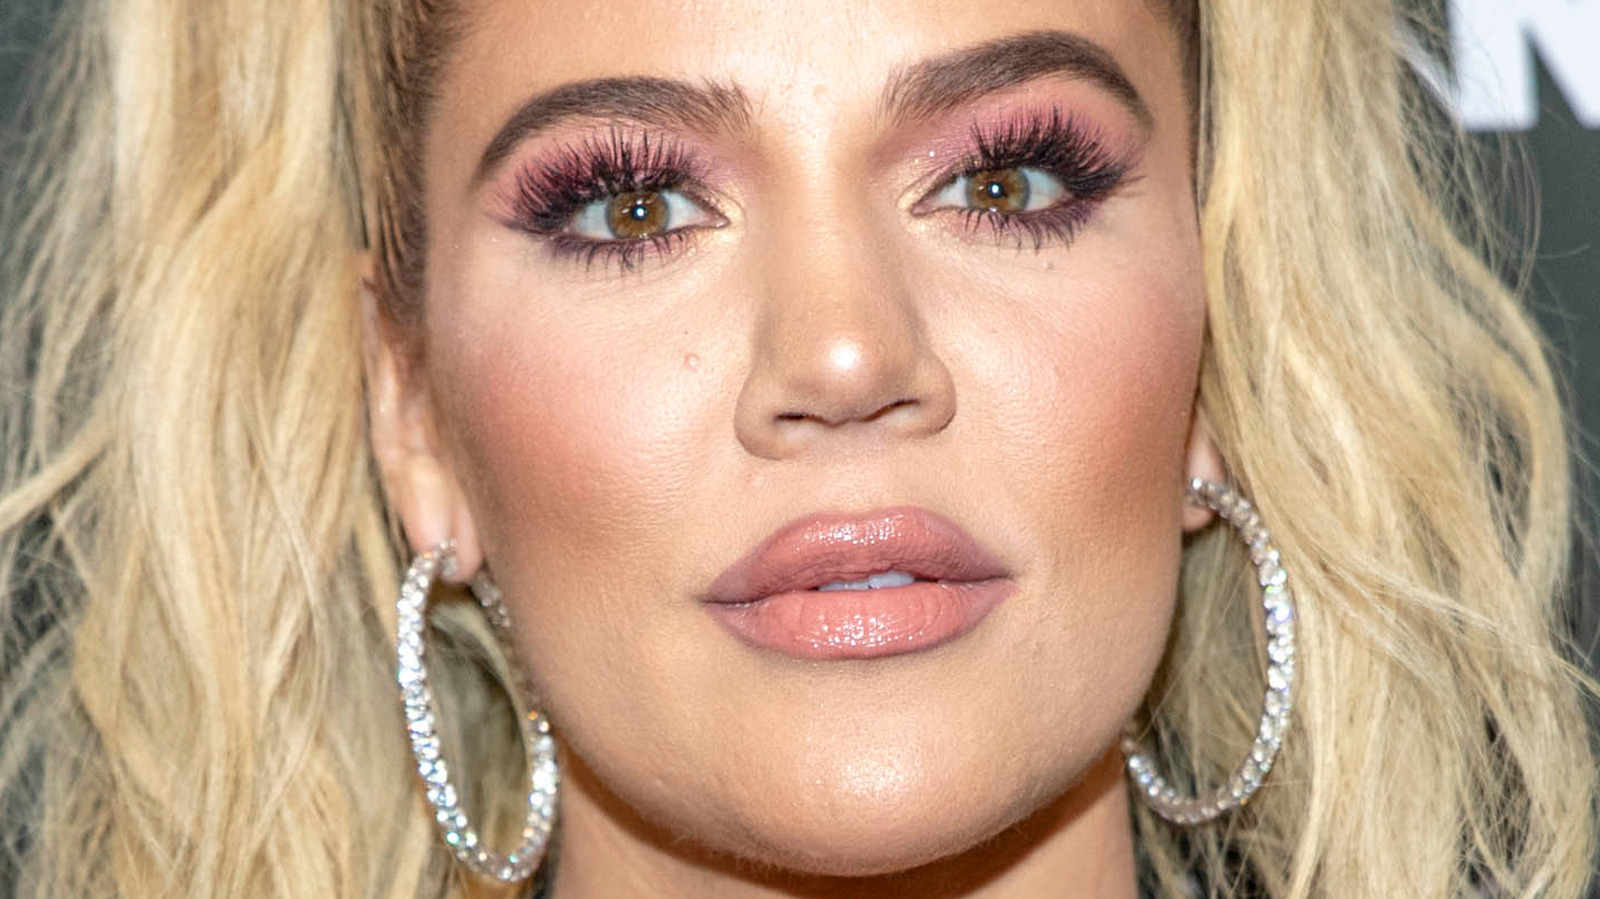 Khloe Kardashian Claps Back At Fans Over Plastic Surgery